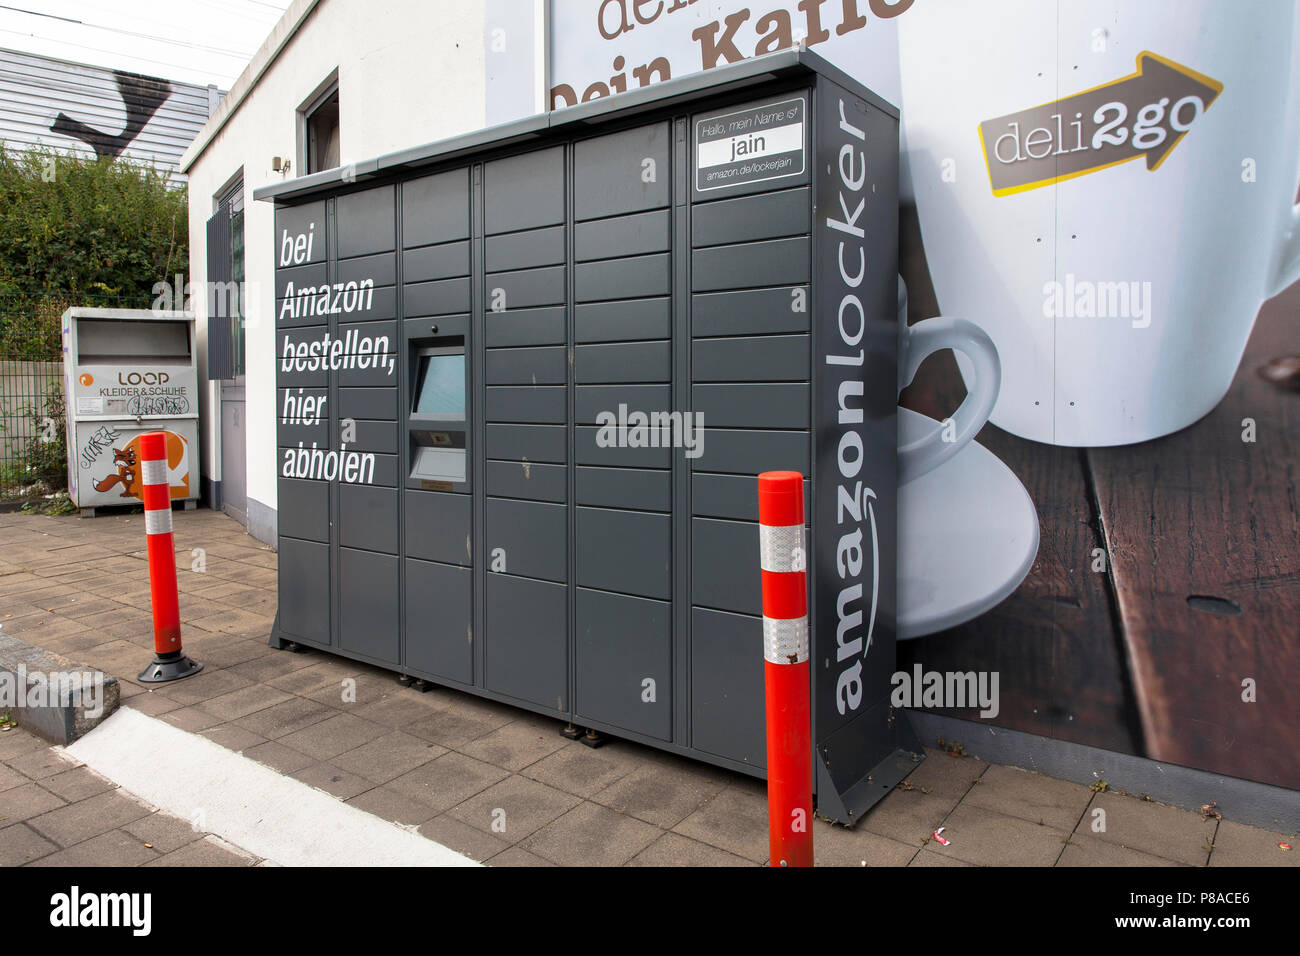 Amazon Locker pick-up station at Bonner street, Cologne, Germany.  Amazon Locker Abholstation an der Bonner Strasse, Koeln, Deutschland. Stock Photo